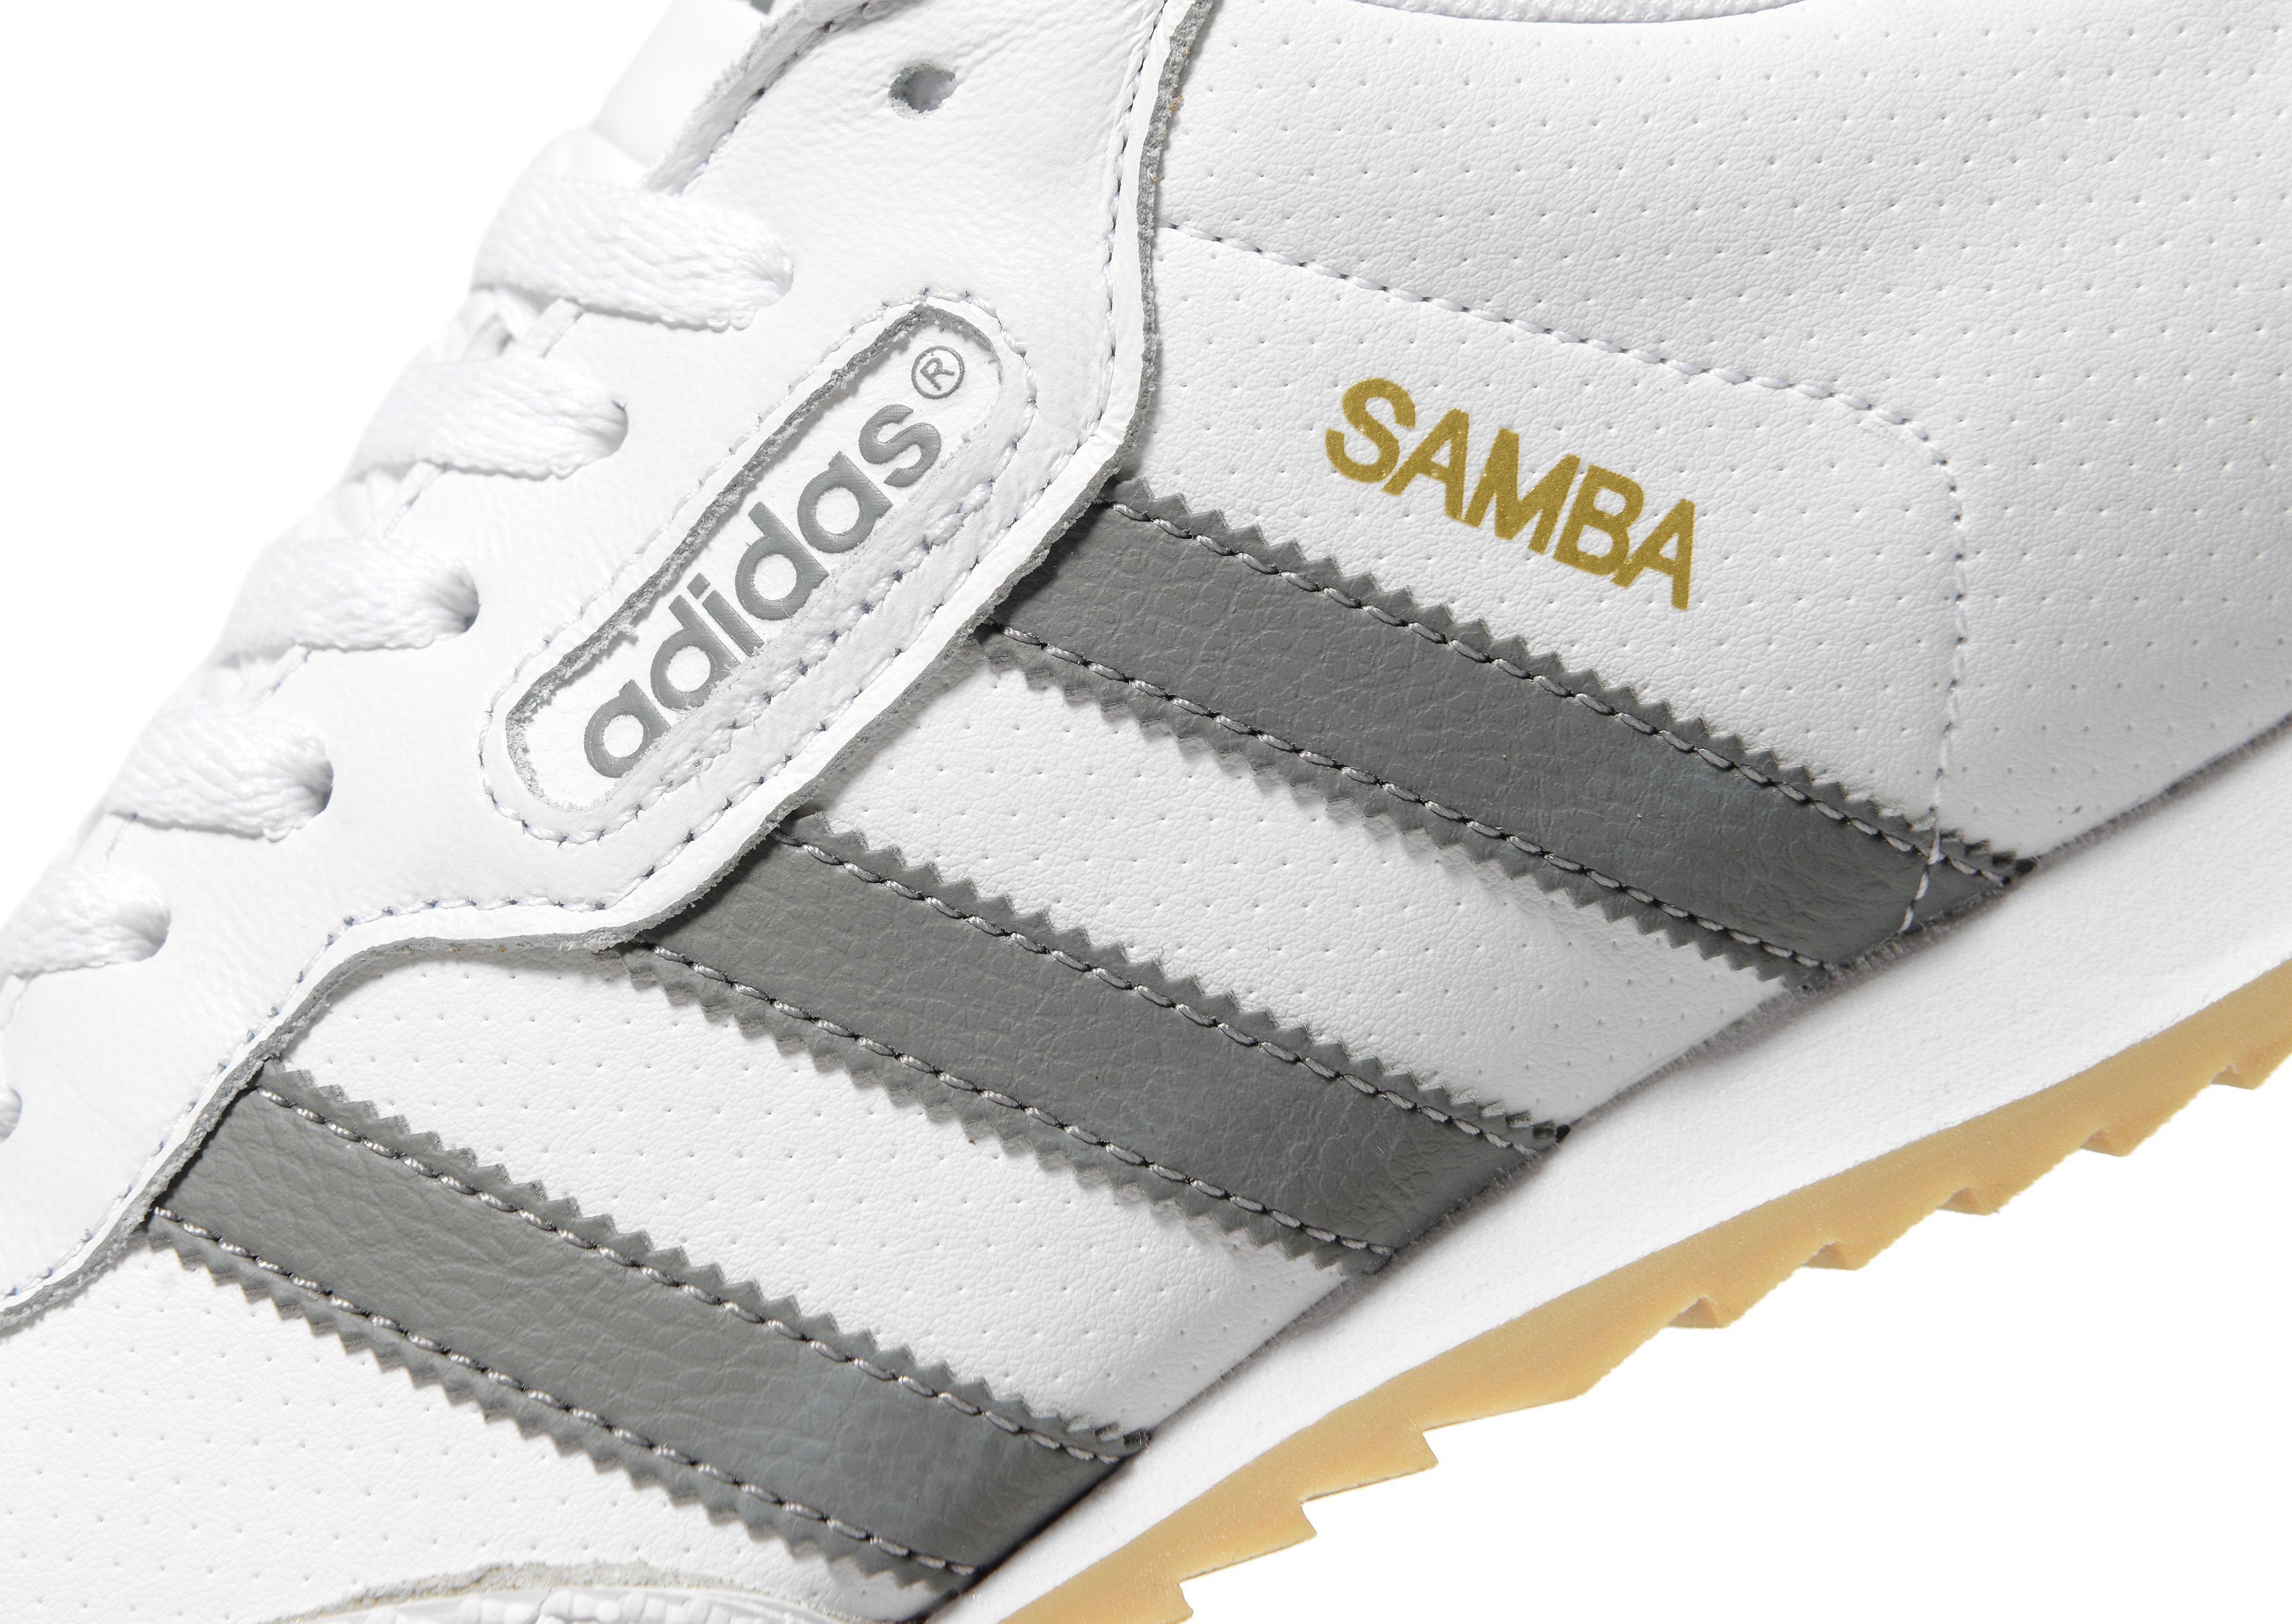 adidas samba grey suede mens trainers- OFF 66% - www.butc.co.za!